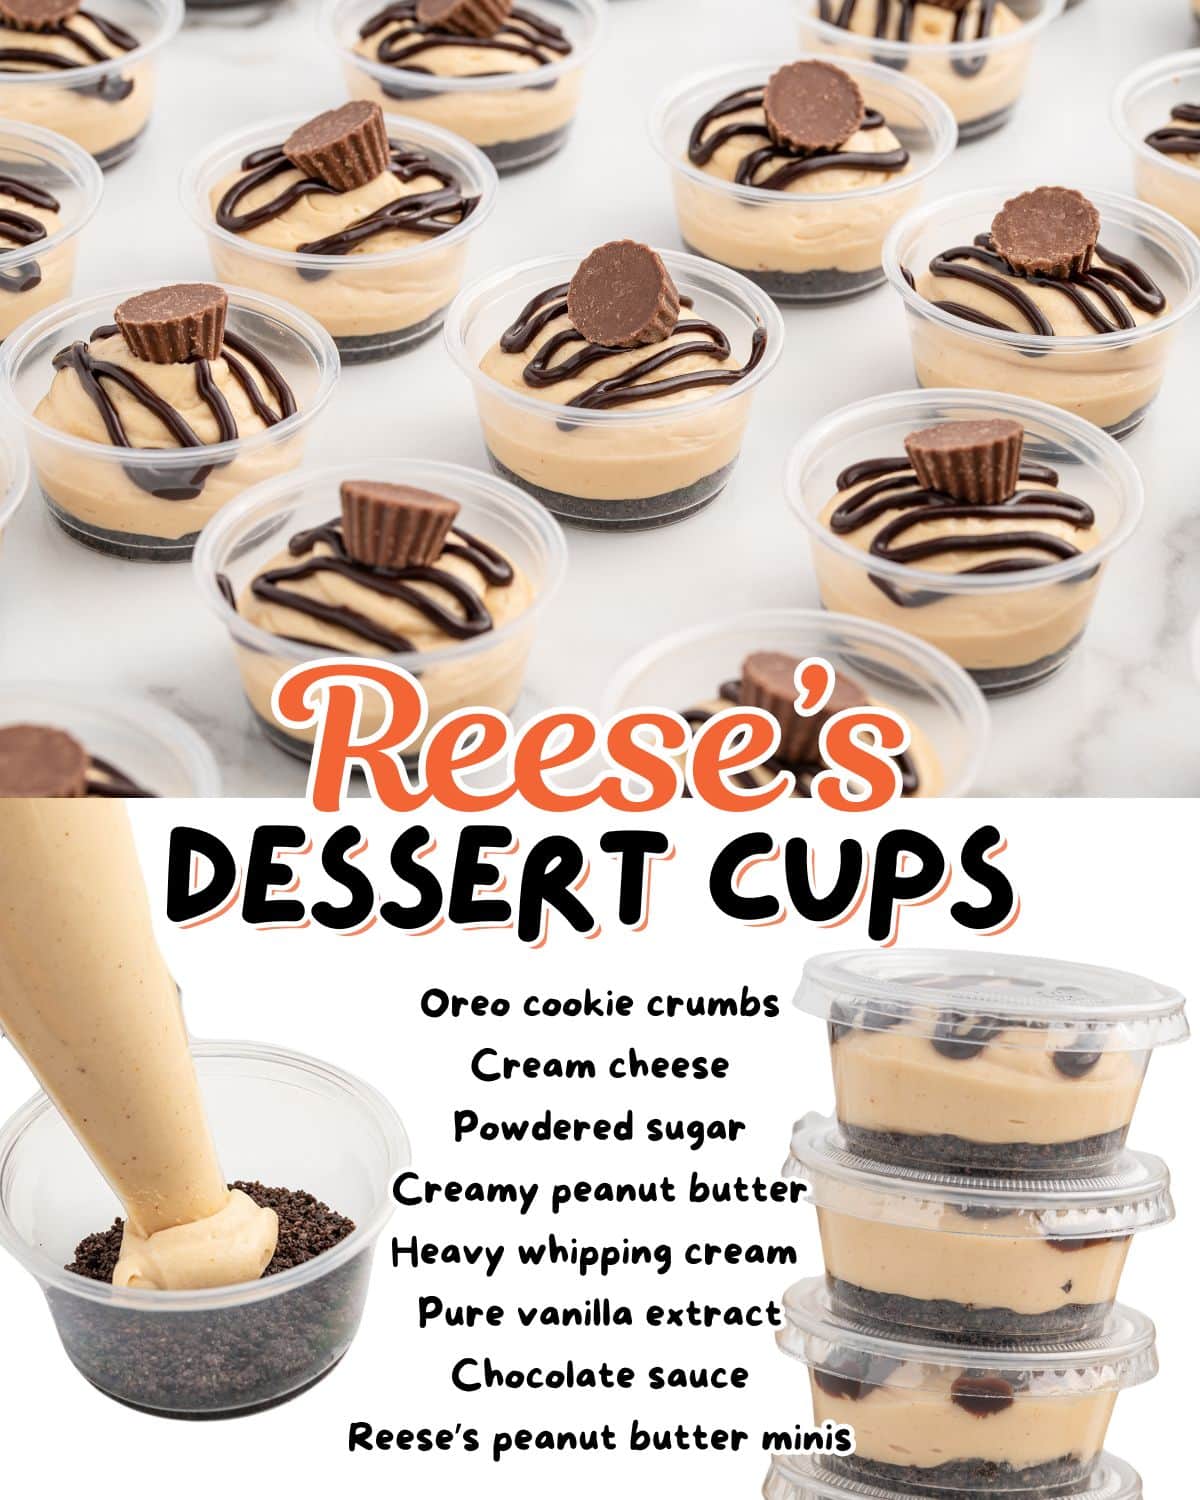 reese's dessert cups fb.